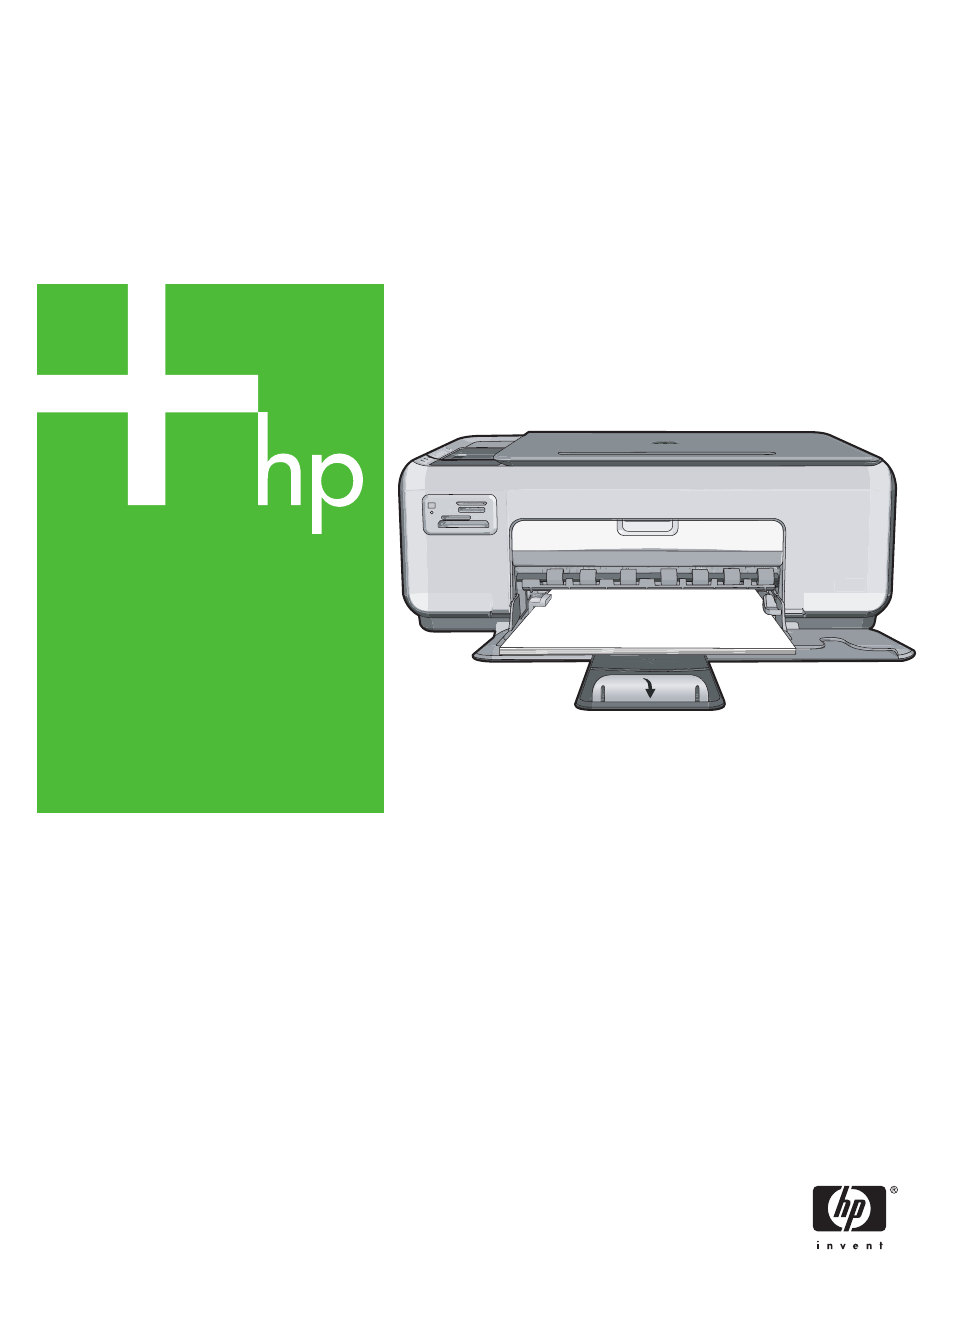 hp printer scanner software for windows 7 free download